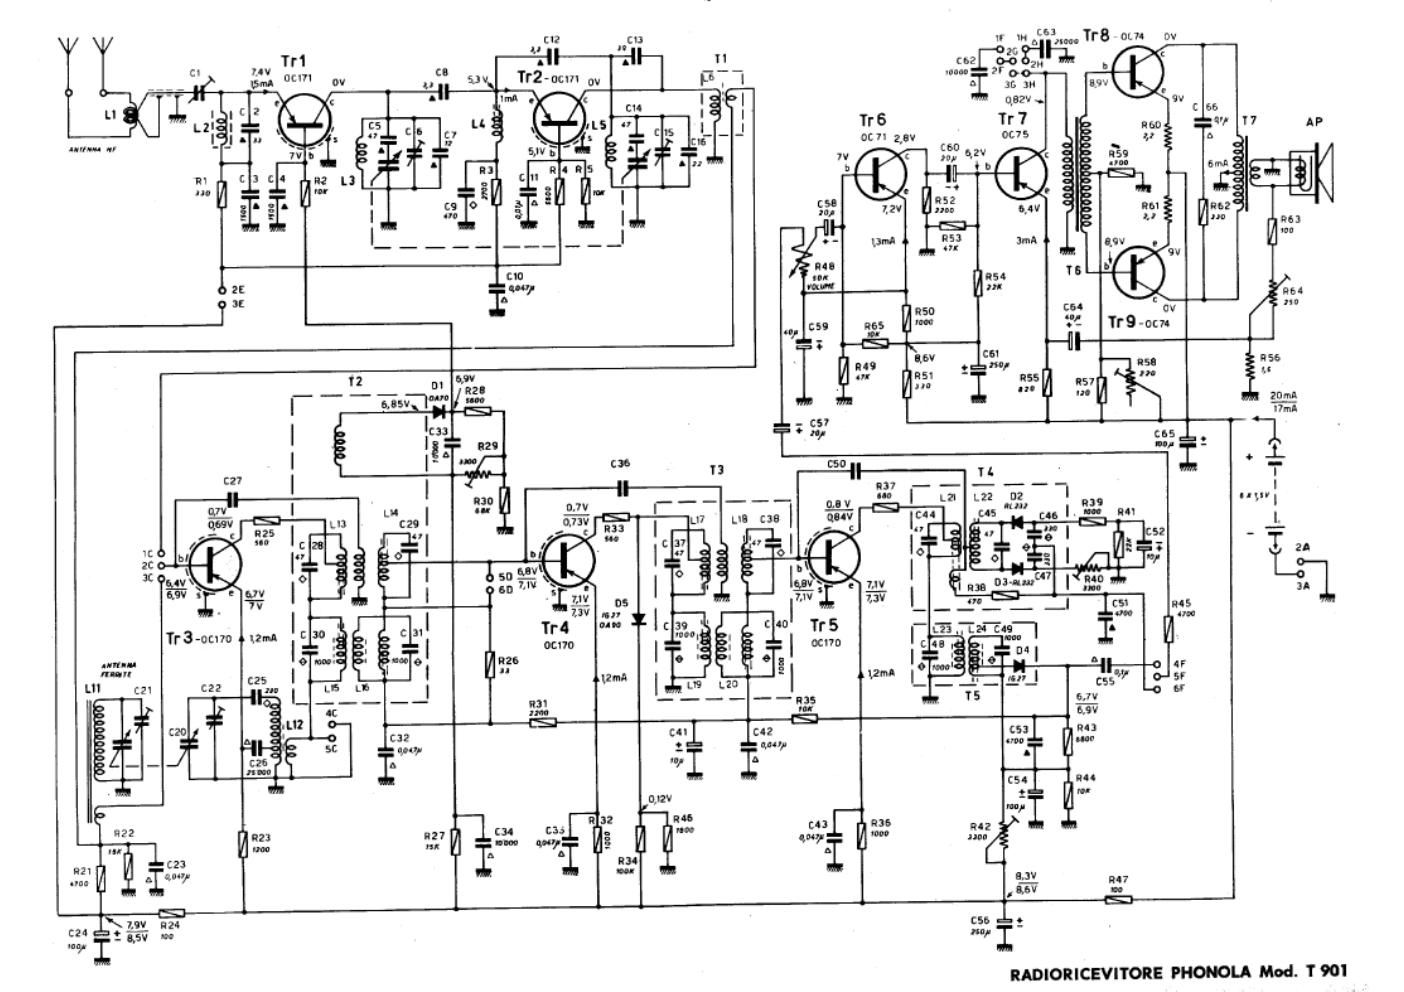 phonola t901 schematic